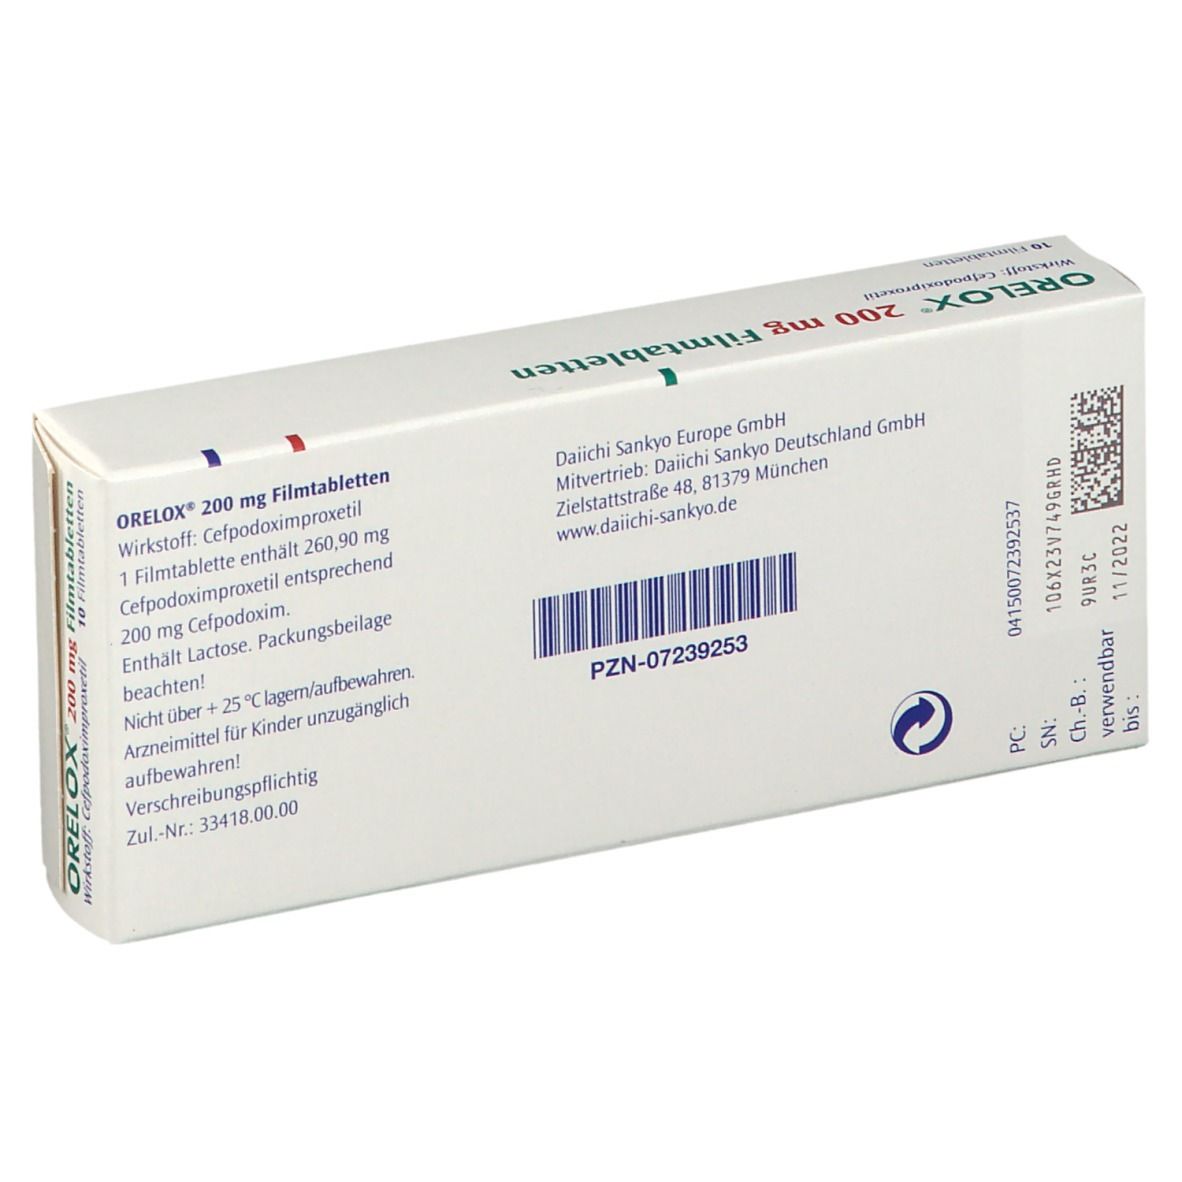 ORELOX® 200 mg